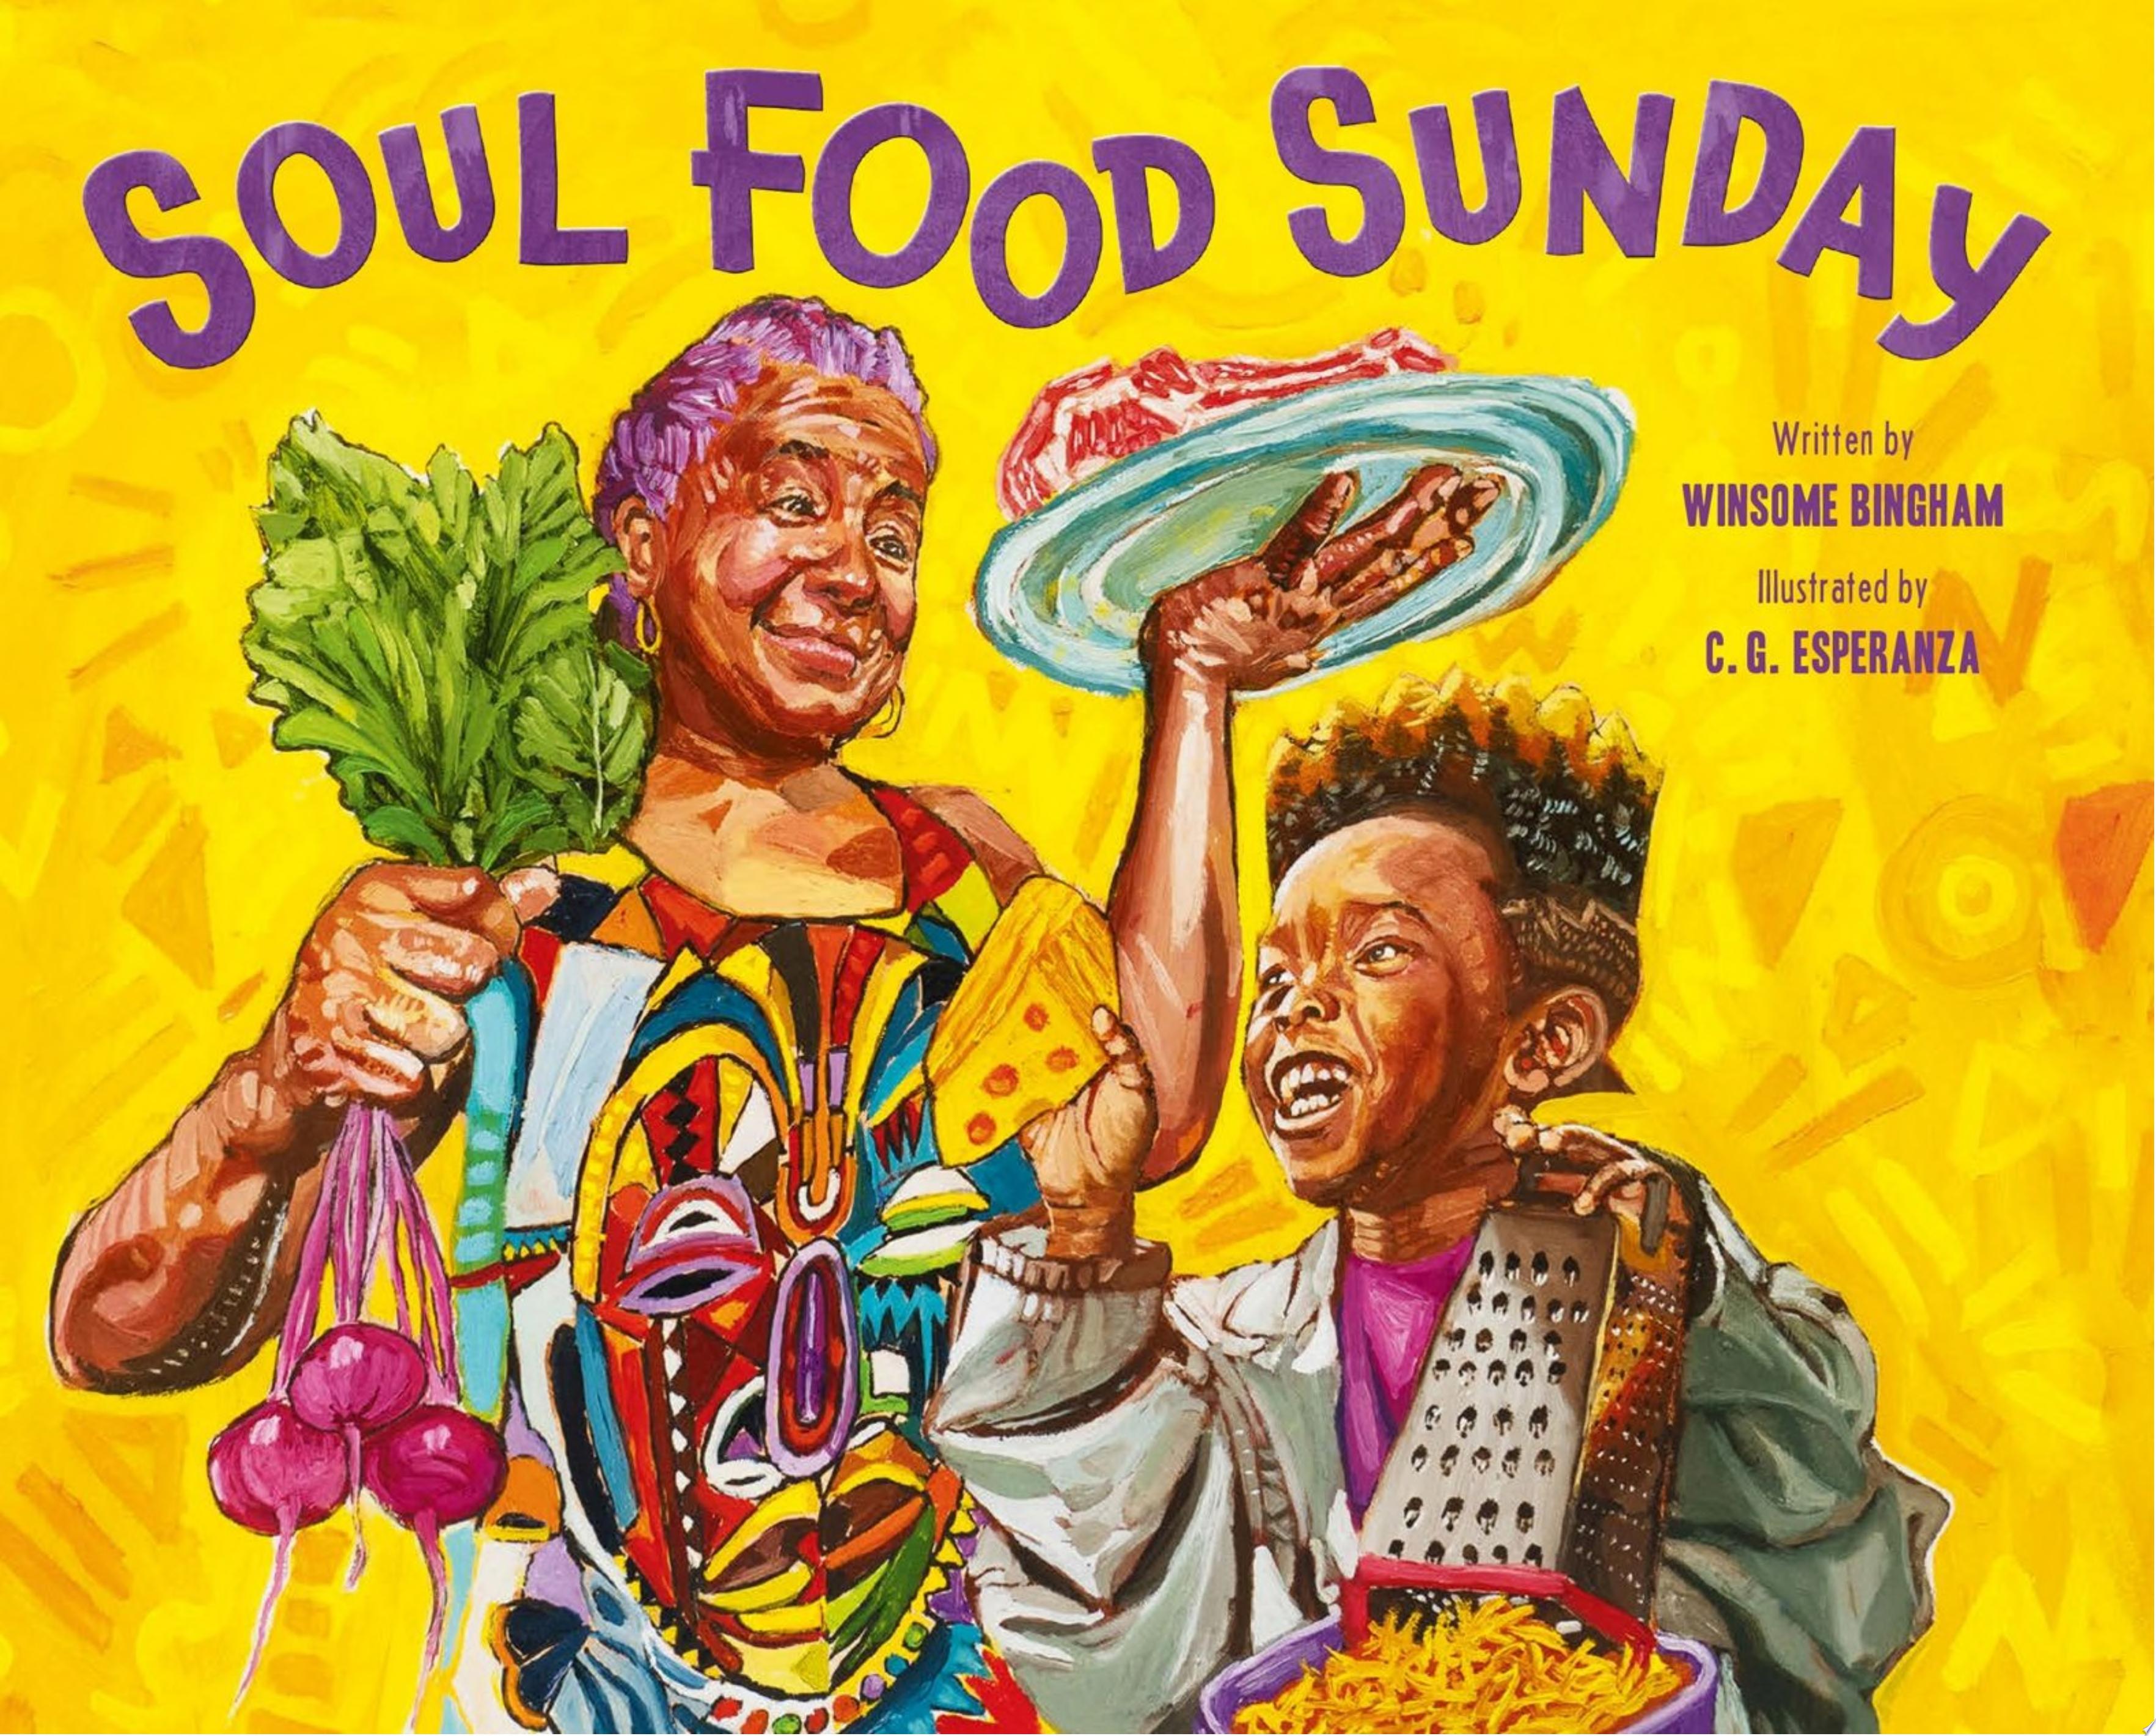 Image for "Soul Food Sunday"